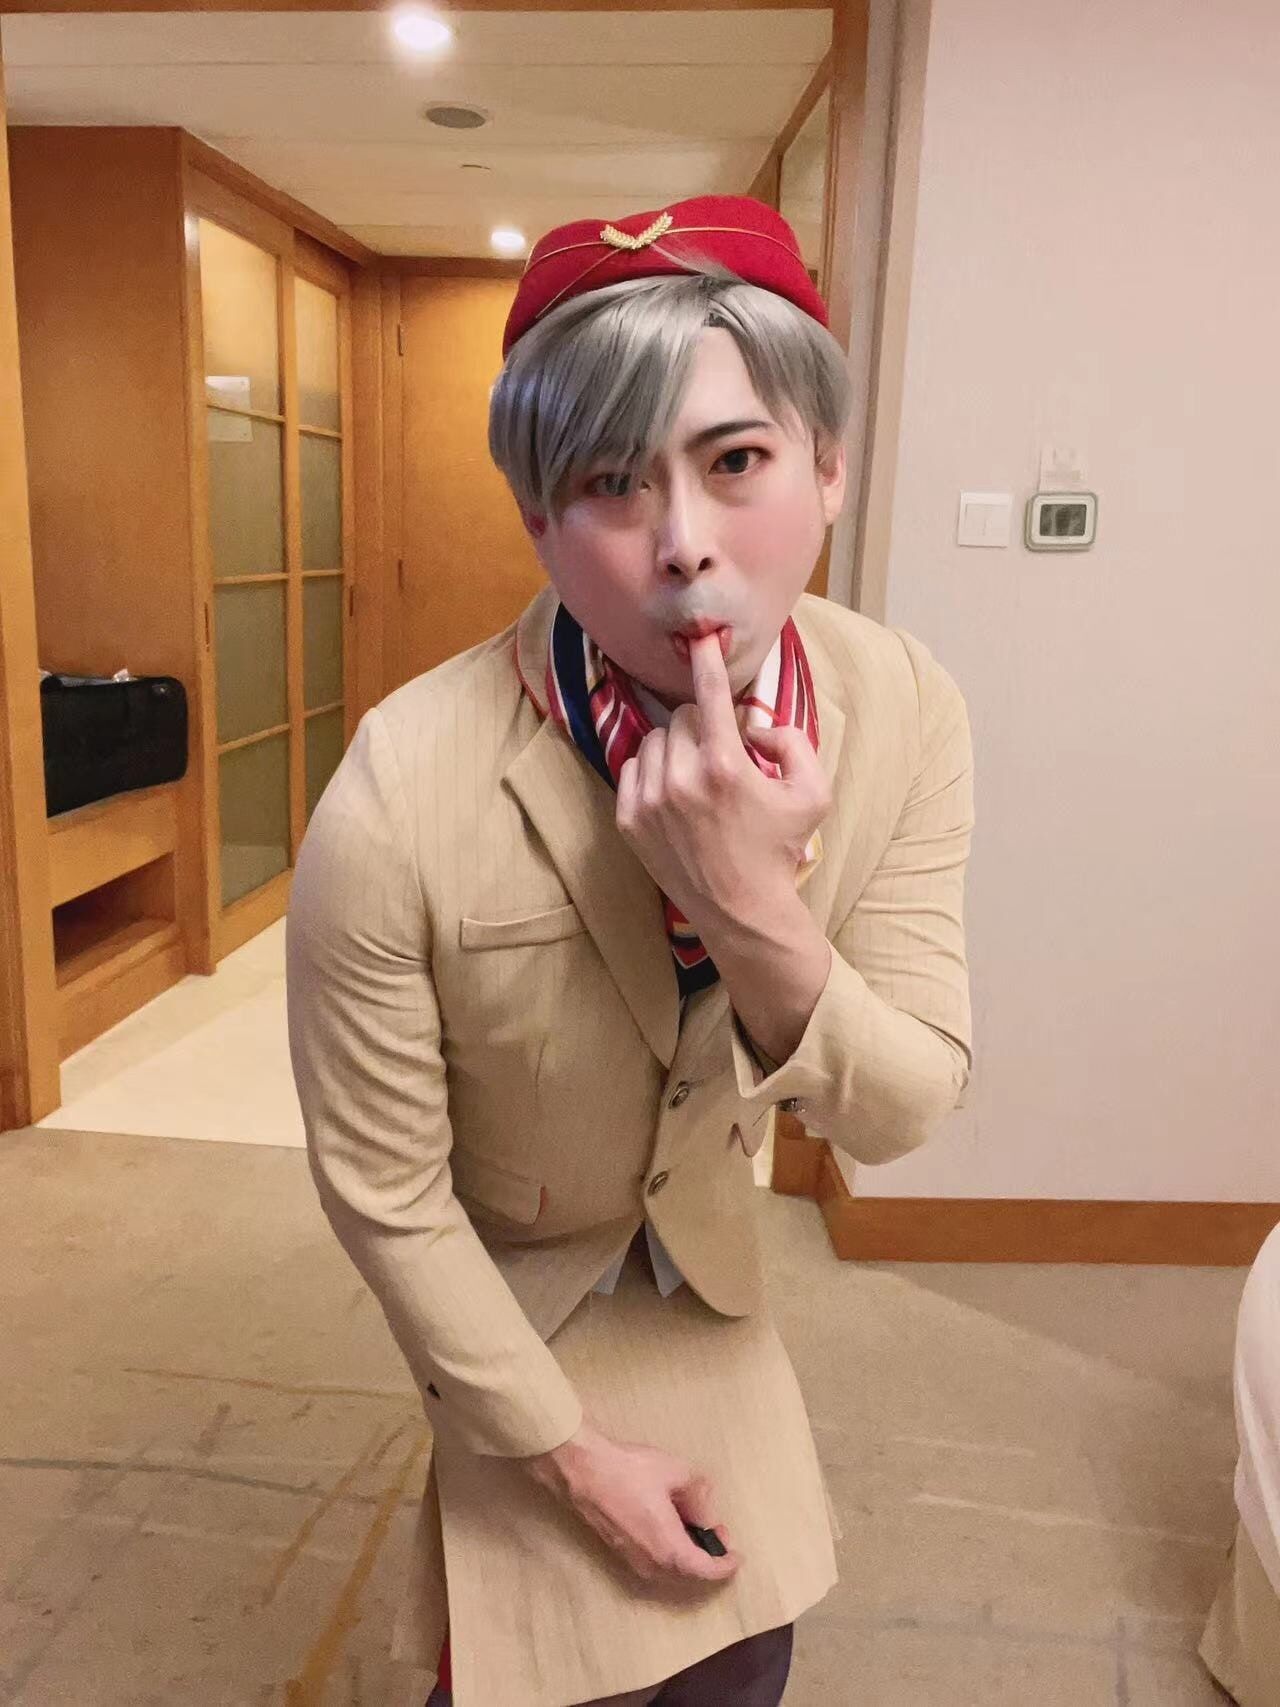 Asian femboy sissy in Emirates flight attendant dress #14